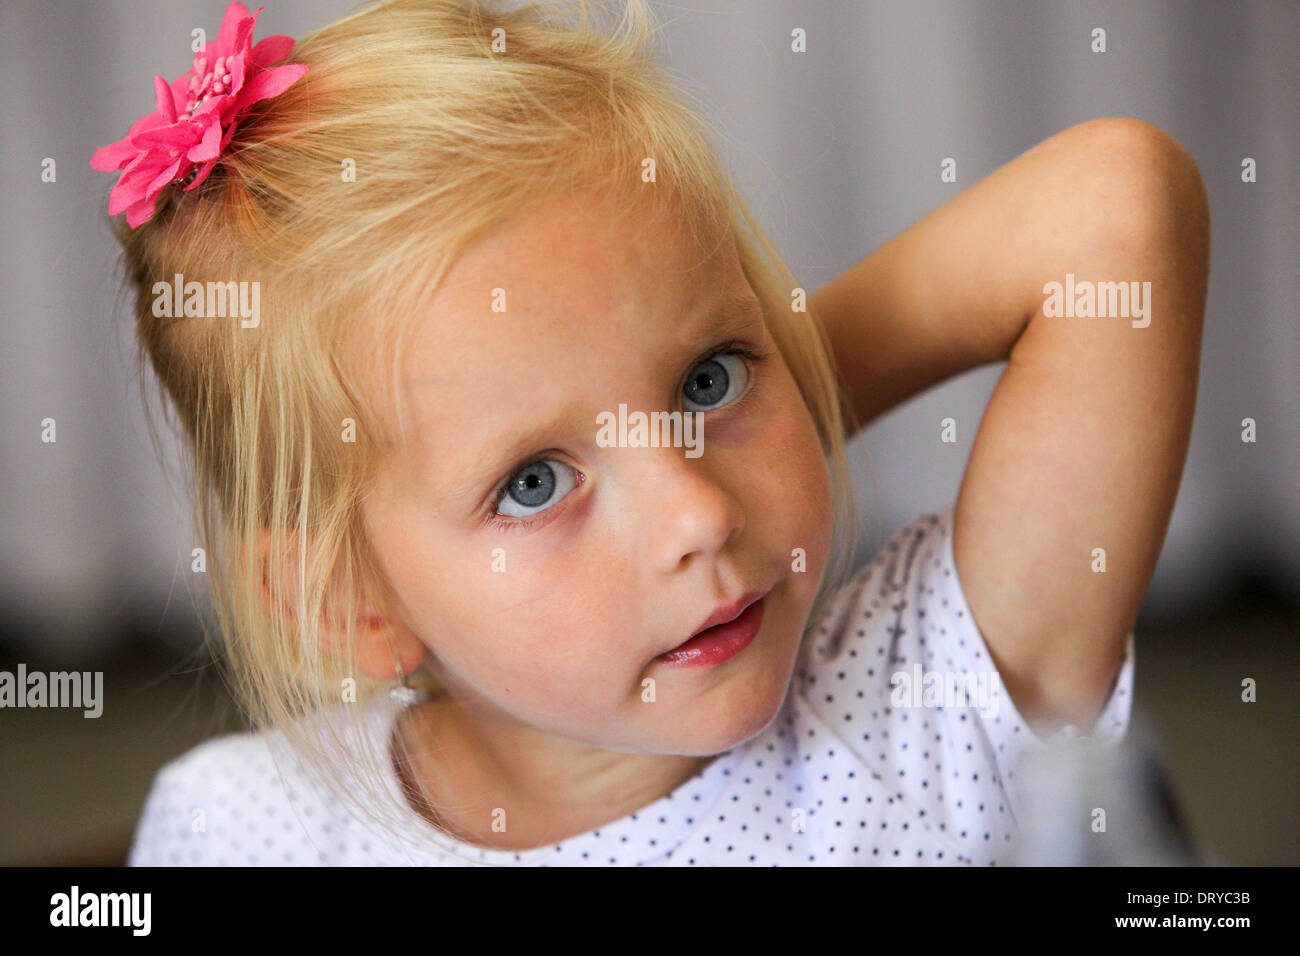 Blonde, portrait of a little blond girl Stock Photo